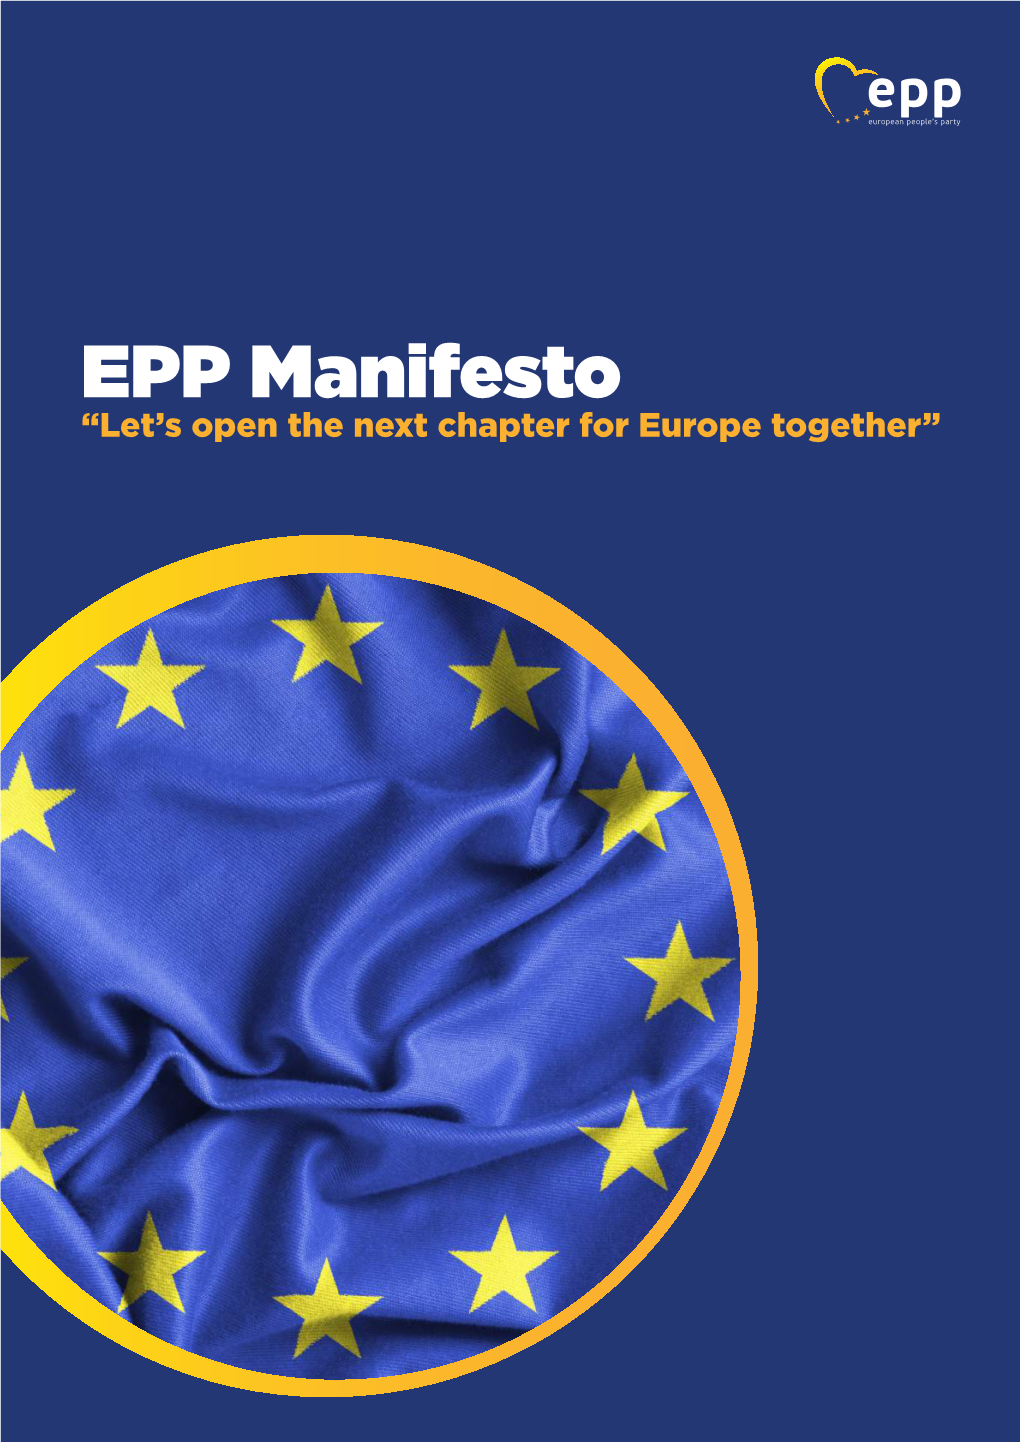 EPP MANIFESTO 2019Updated